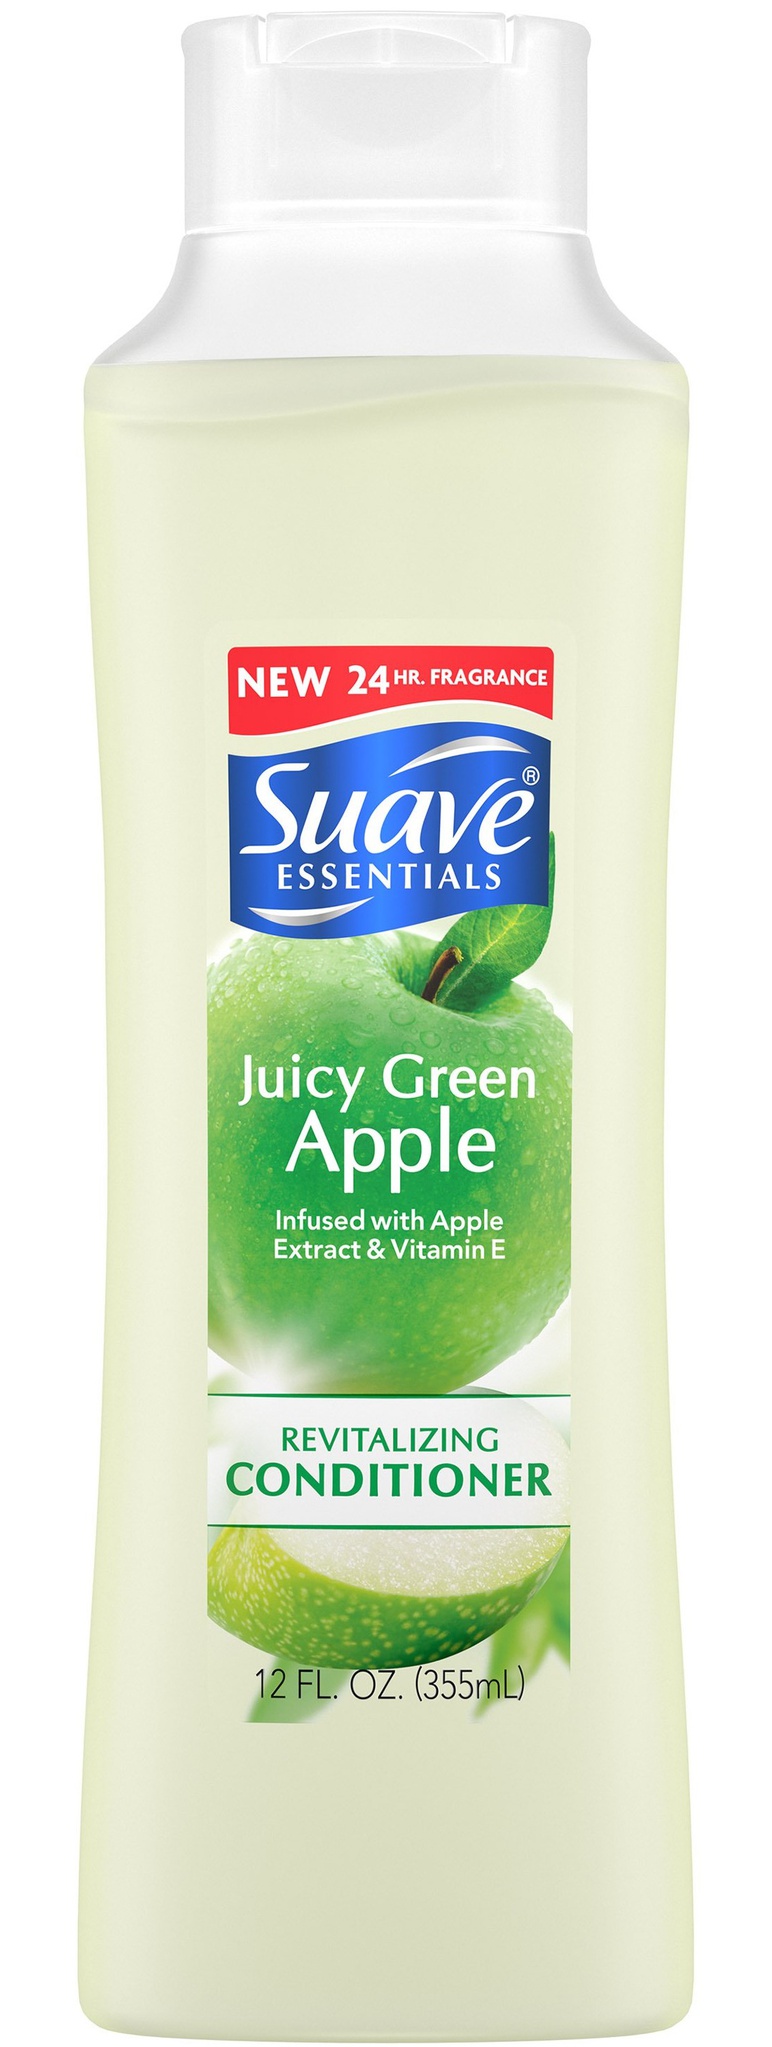 Suave Essentials Juicy Green Apple Conditioner